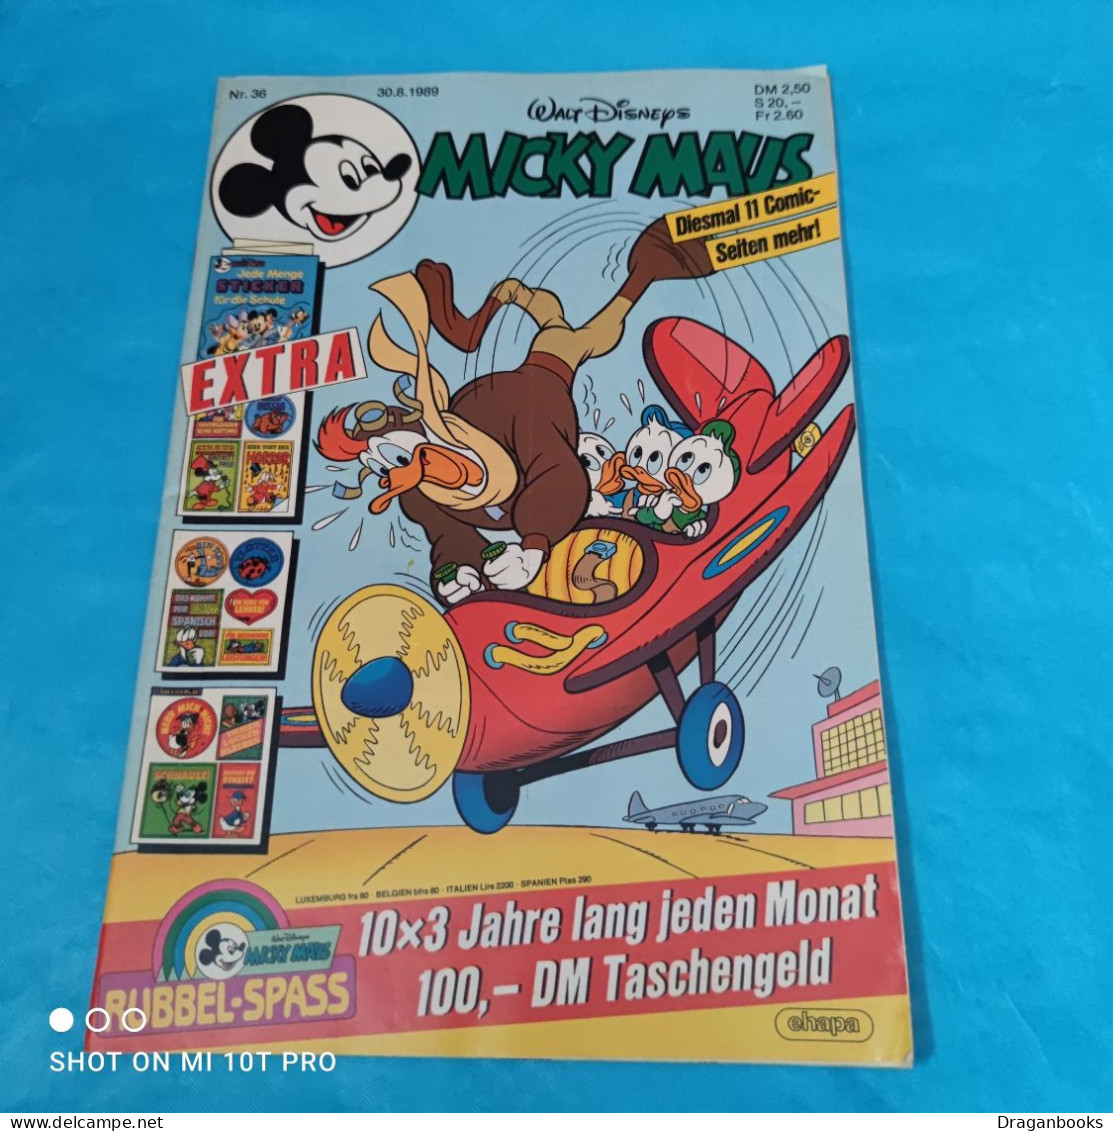 Micky Maus Nr. 36 - 30.8.1989 - Walt Disney